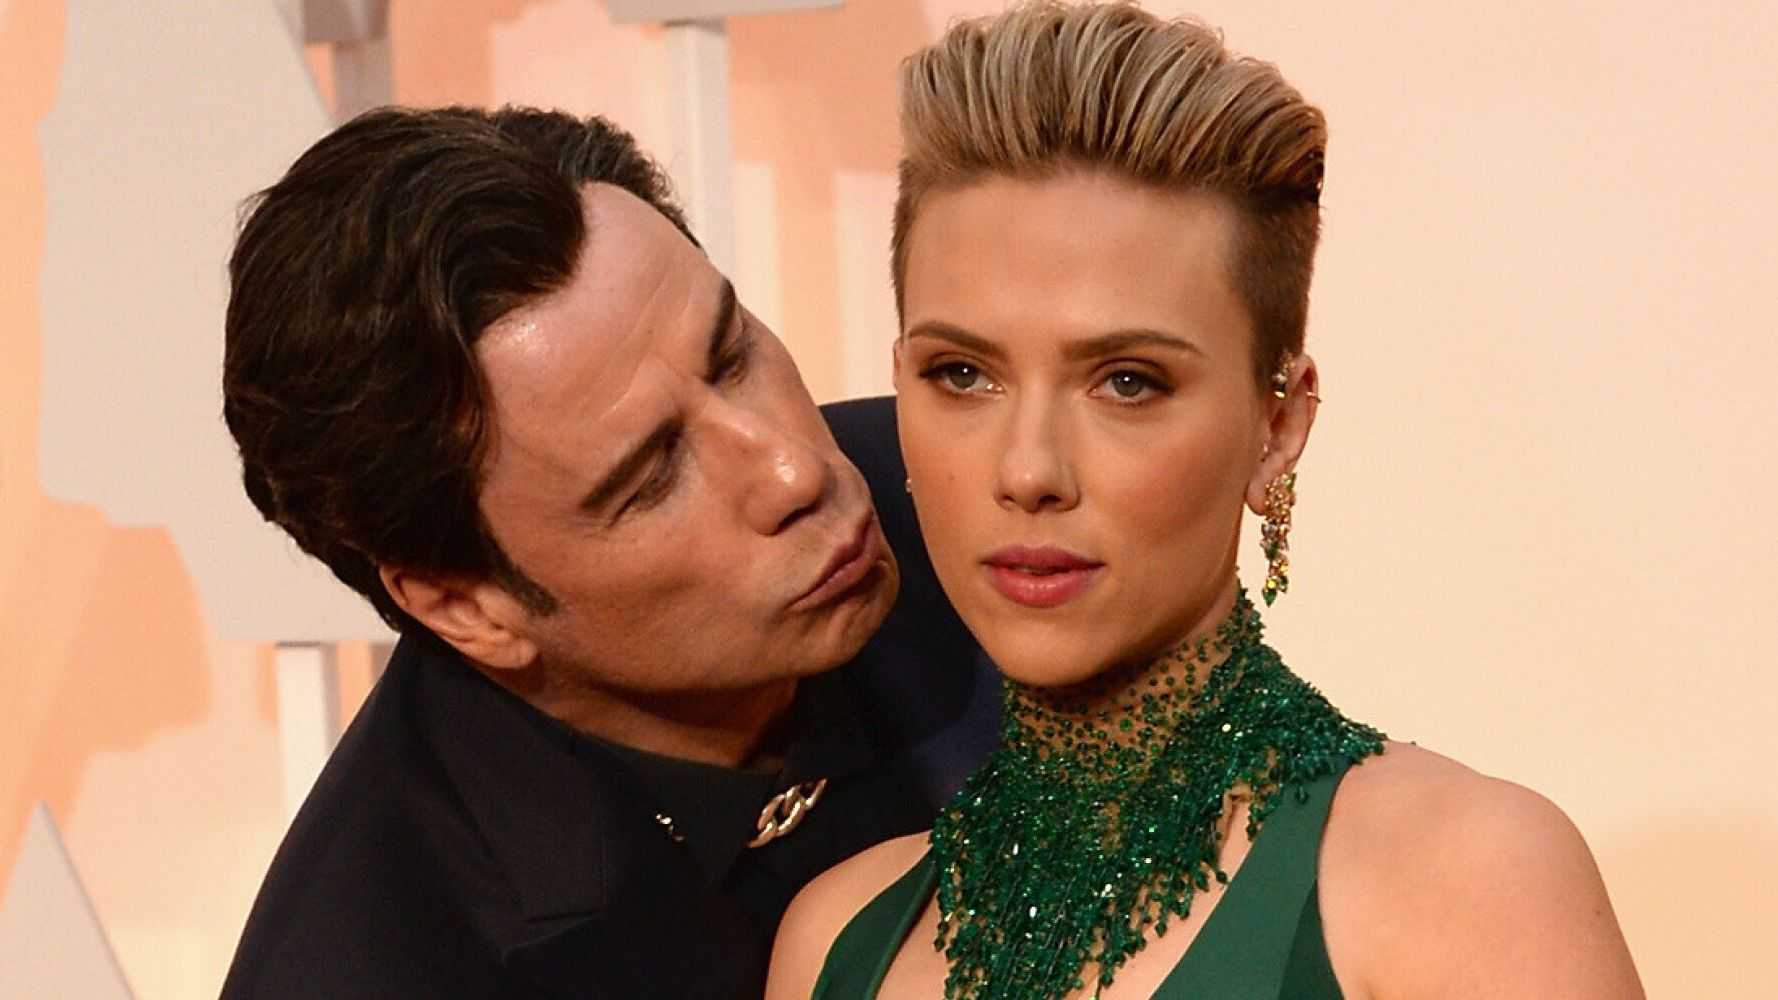 Revisiting John Travolta's Oscar Moment with Scarlett Johansson: 'Not Strange, Creepy, or Inappropriate'